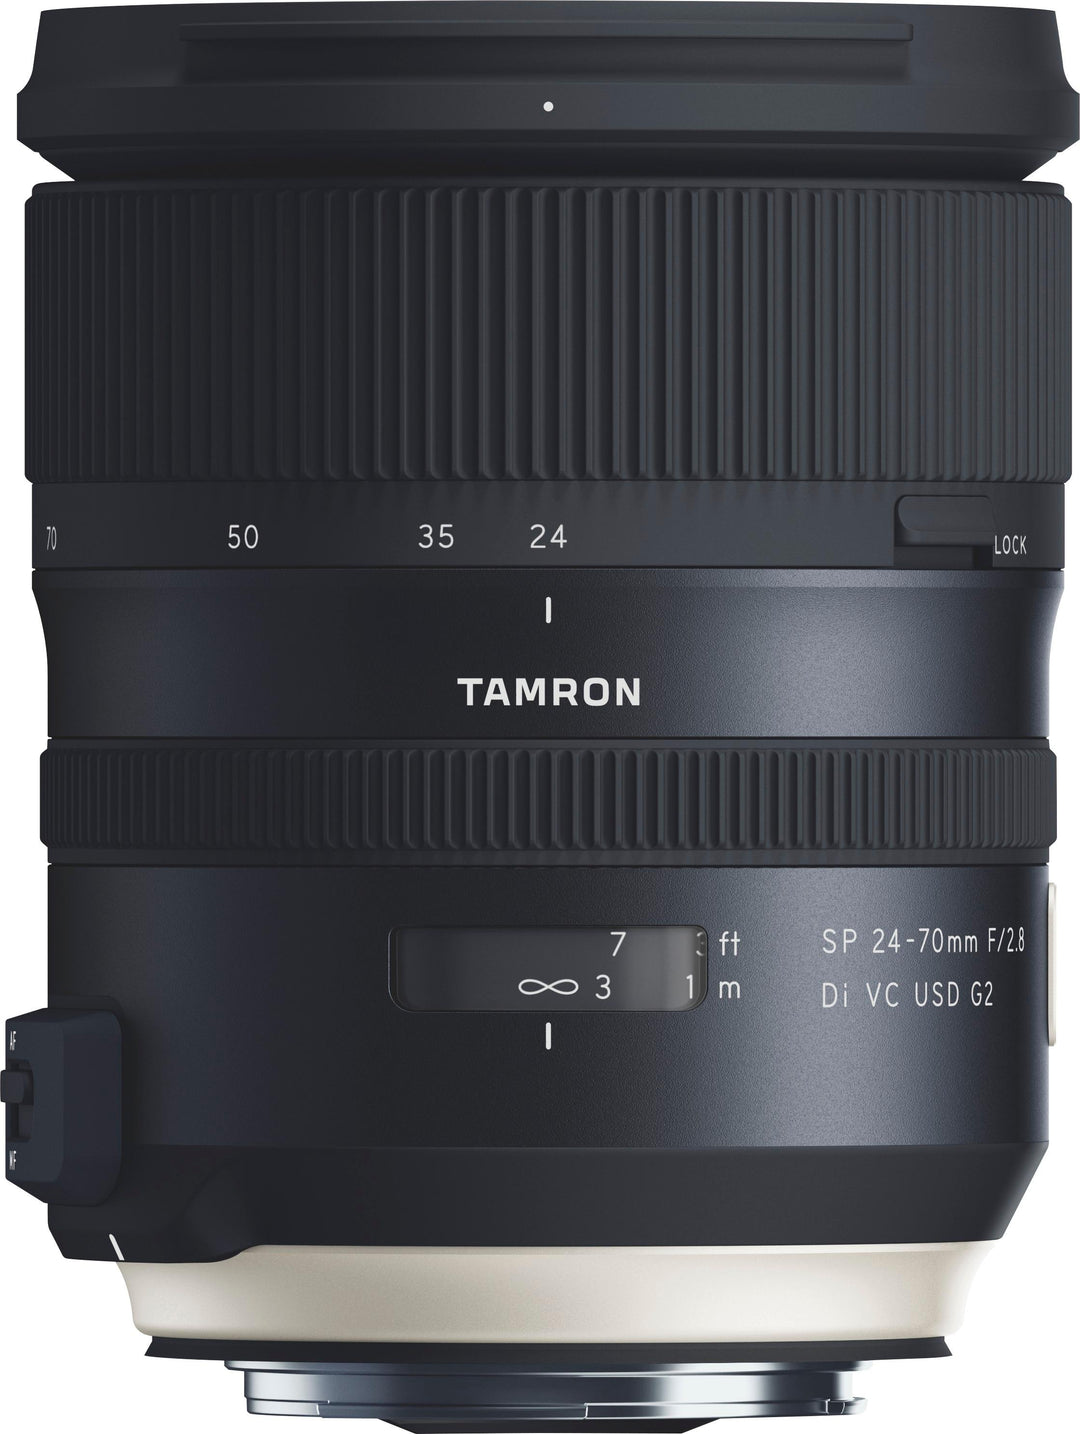 Tamron - SP 24-70mm F/2.8 Di VC USD G2 Zoom Lens for Canon DSLR cameras - black_0